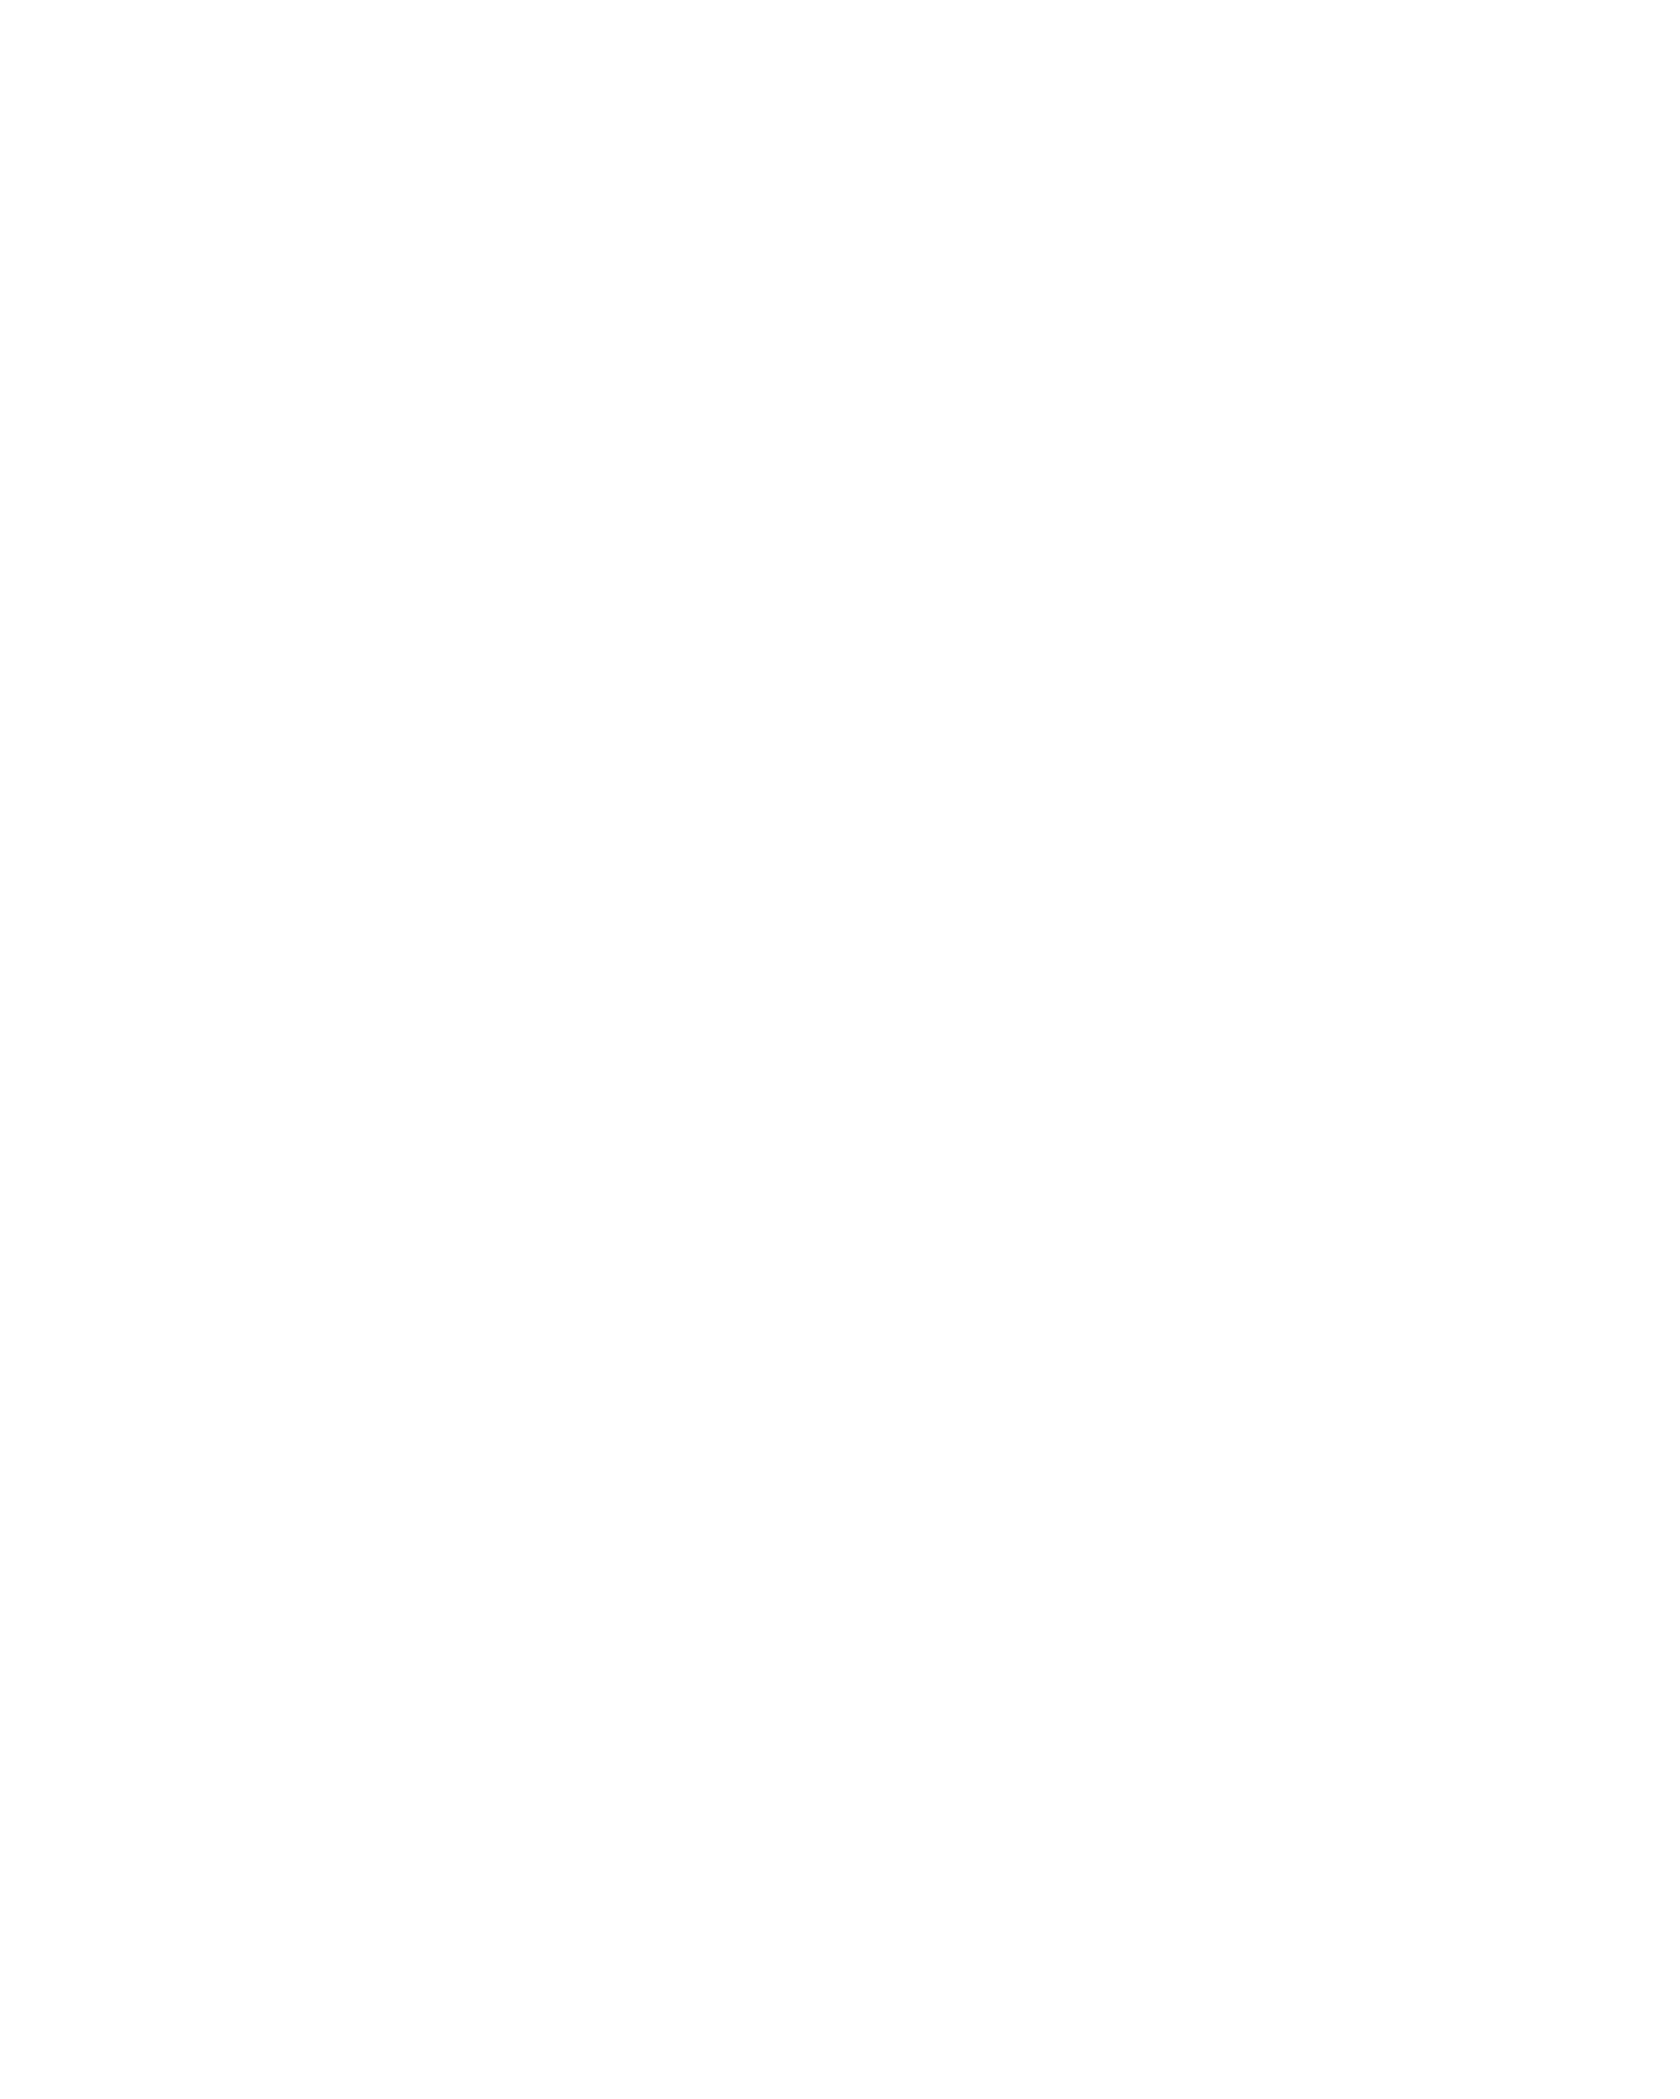 Натюрморт с зеркалом. Чан Дык Минь 80 х 65 см, 2019 г. Вьетнам, Ханой><meta itemprop=